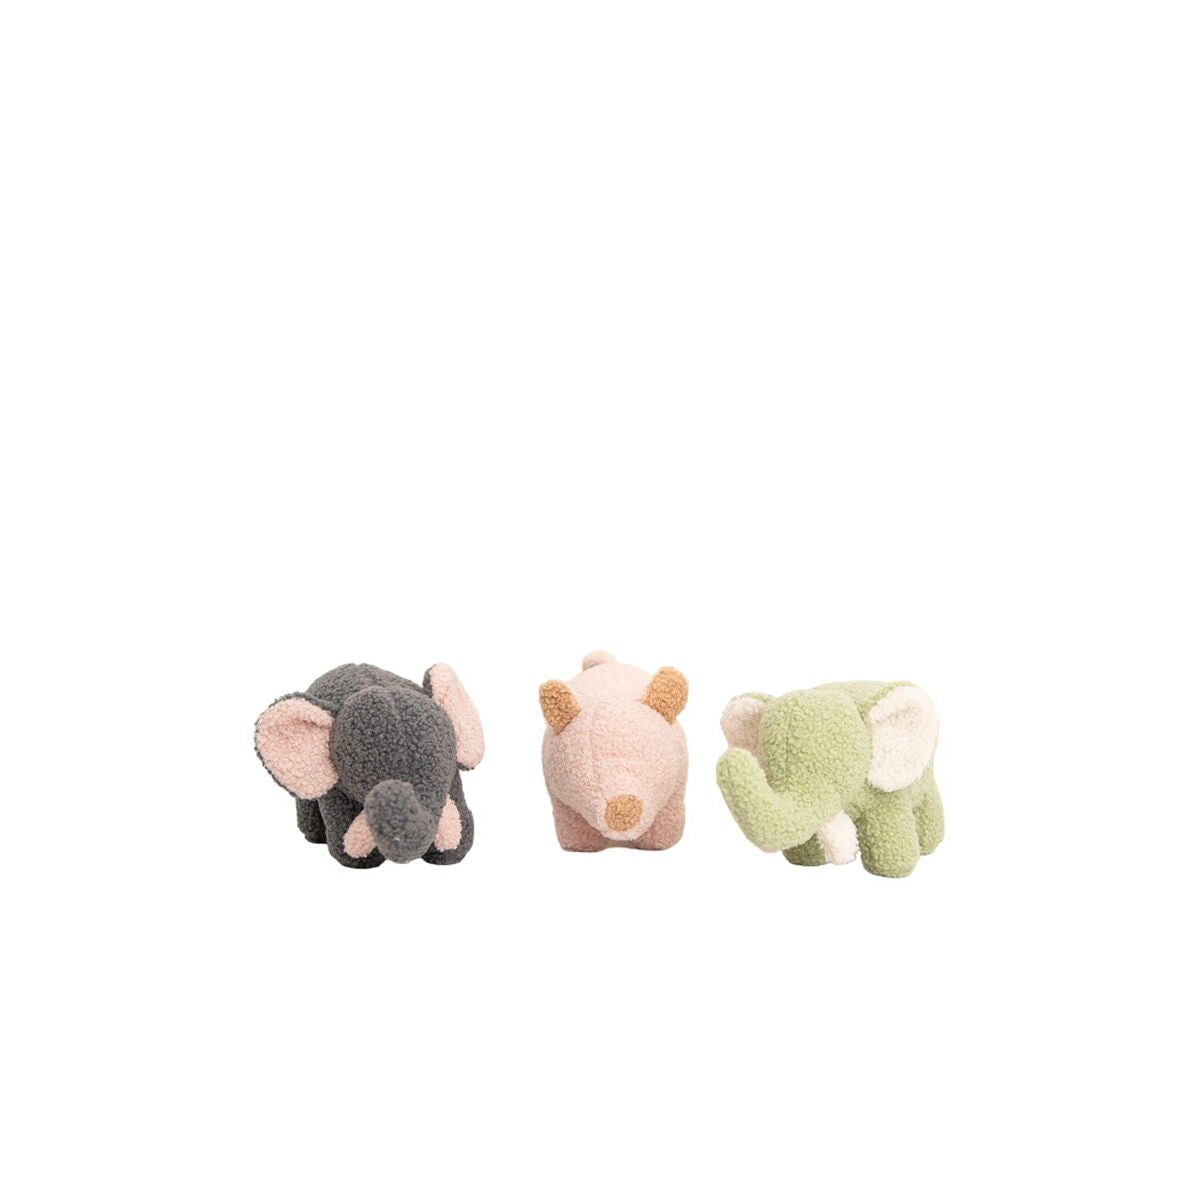 Plüschtier Crochetts Bebe grün Grau Elefant Schwein 30 x 13 x 8 cm 3 Stücke